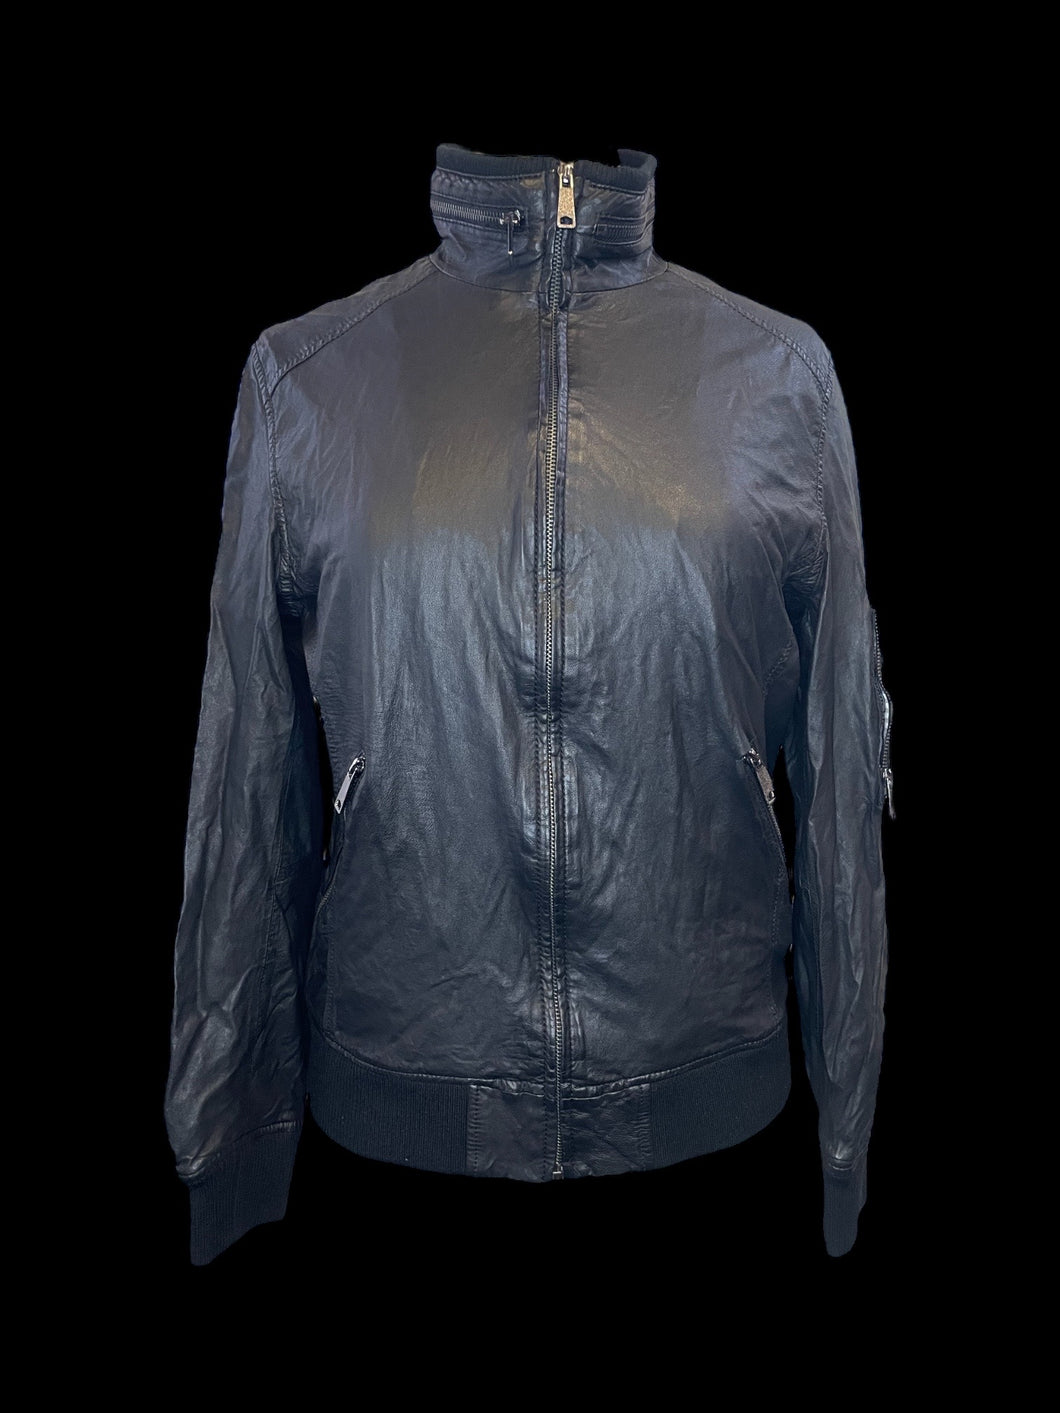 L Black leather zip-up jacket w/ blue, white, & red cotton lining, zipper details, & rib knit hems